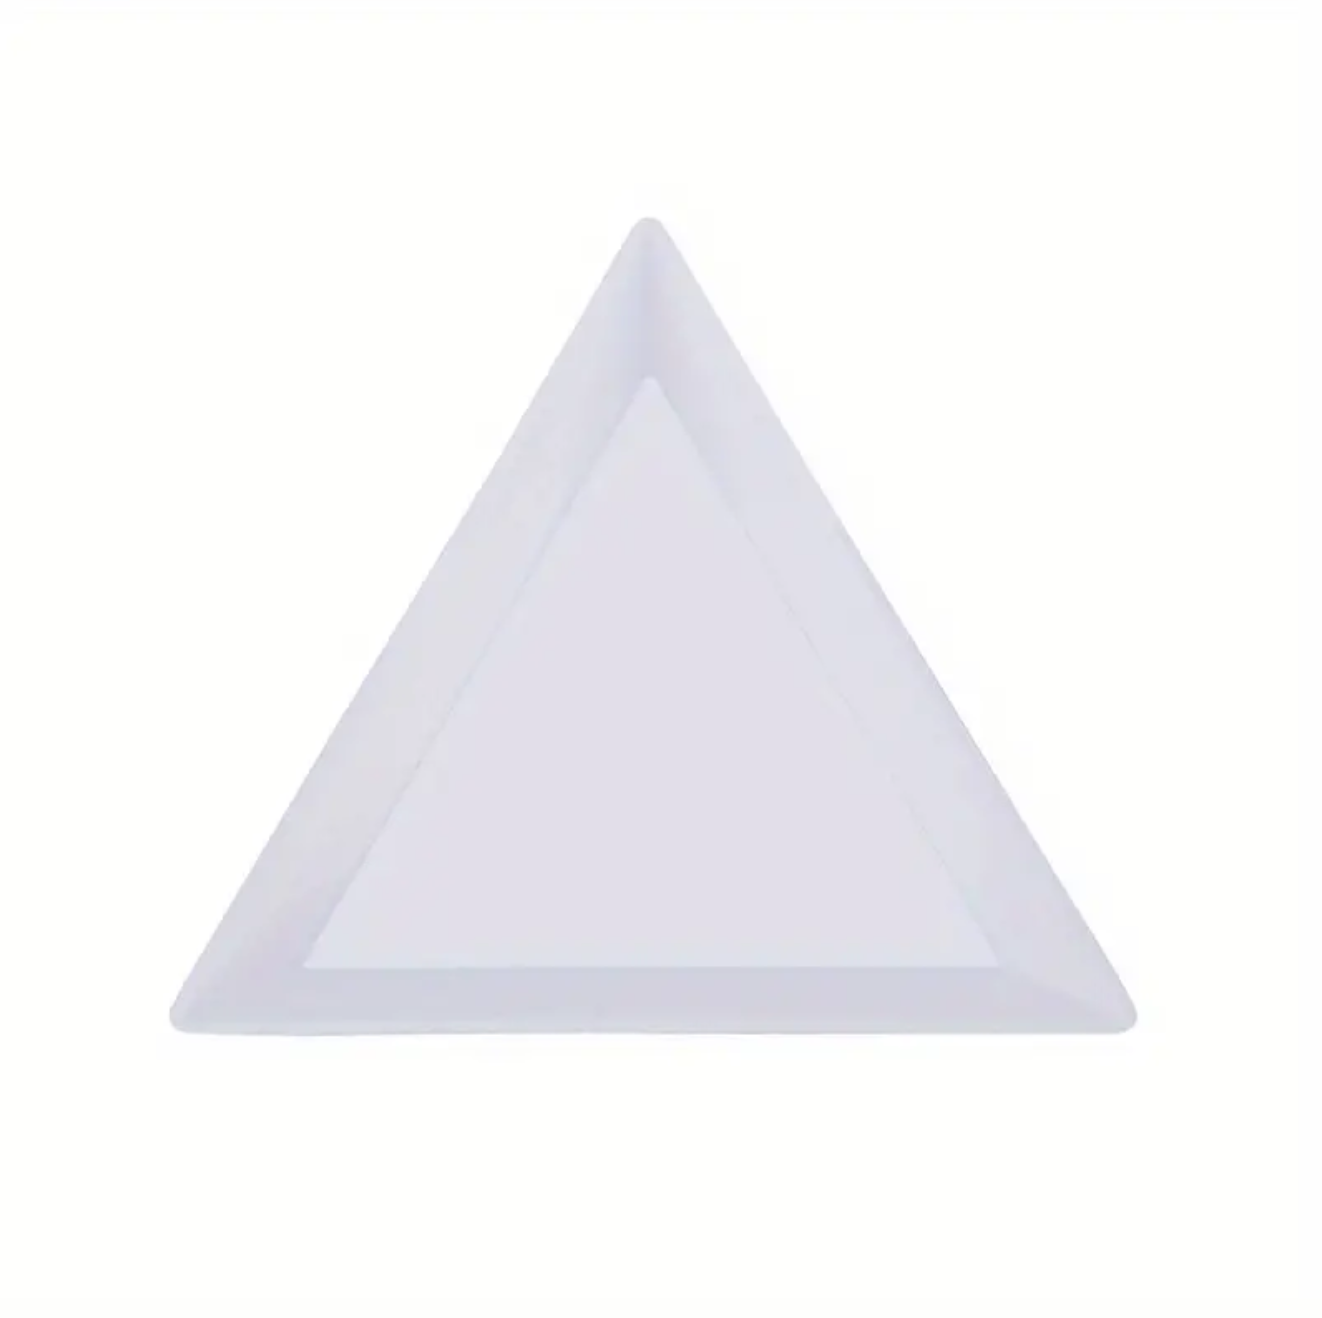 White Triangle Tray